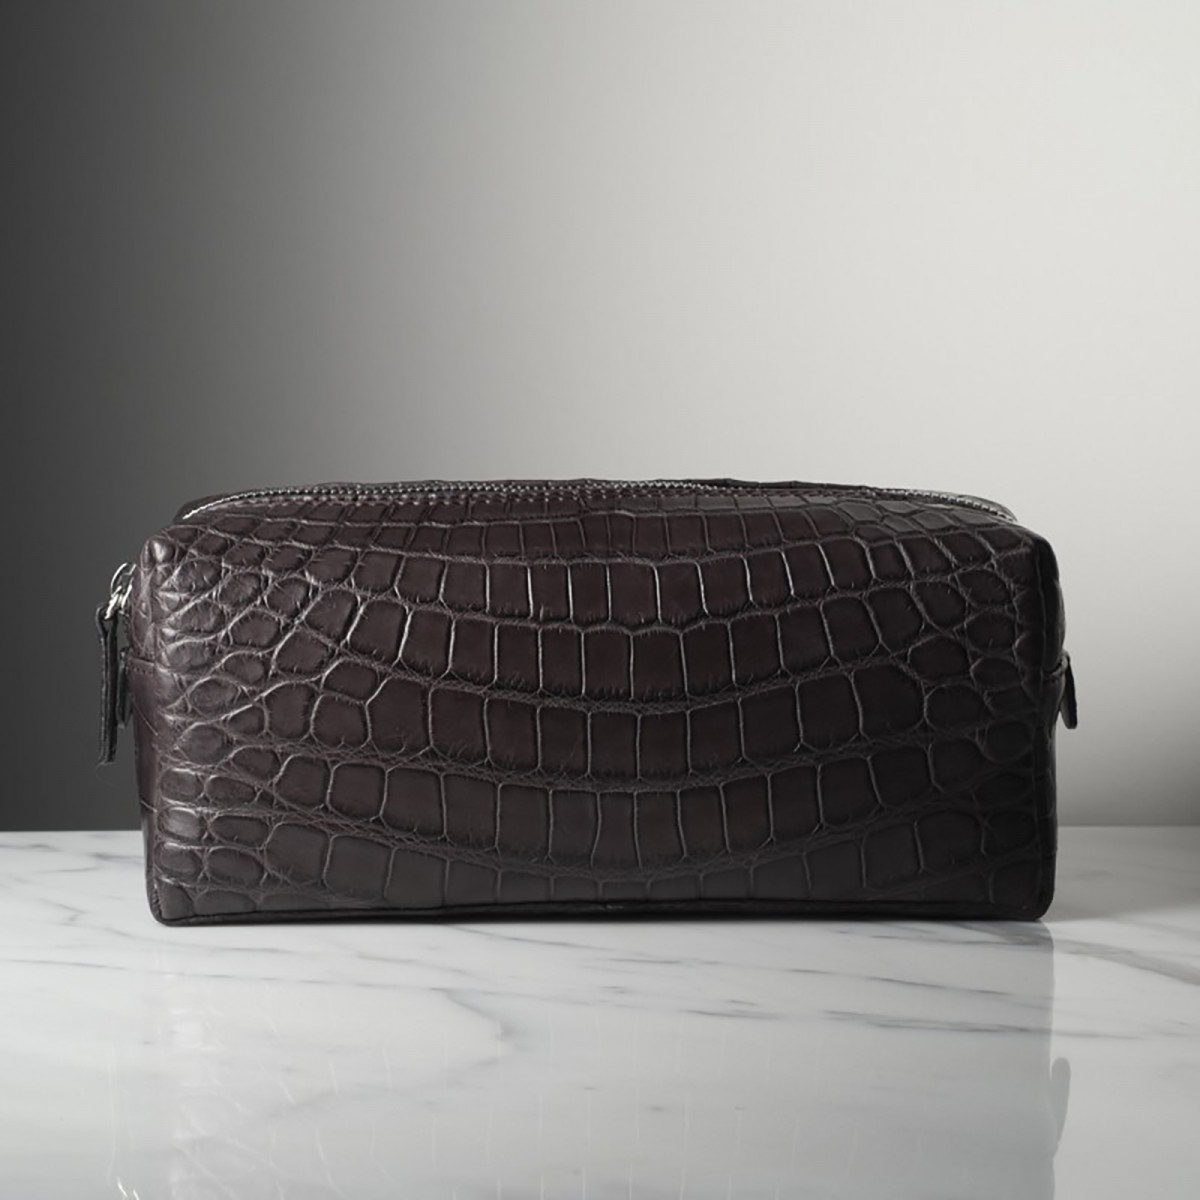 JOSEPH CROCODILE - Crocodile leather toiletry bag, handmade in Italy